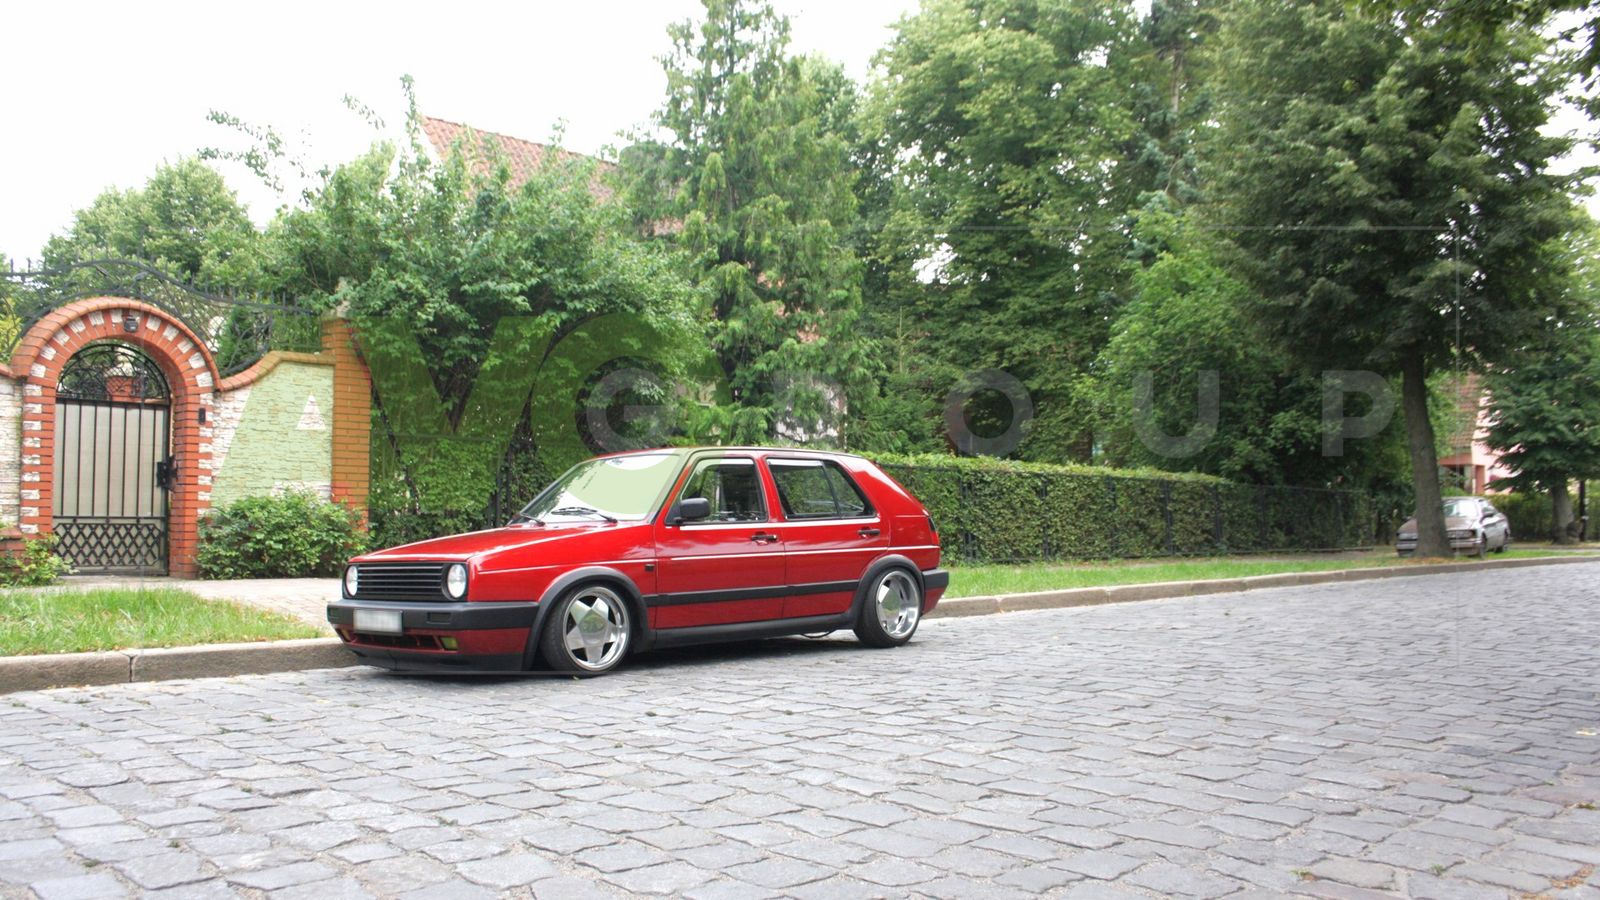 GTI front big bumper spoiler for VW Golf 2 / Jetta 2 1983-1992 ABS Matt